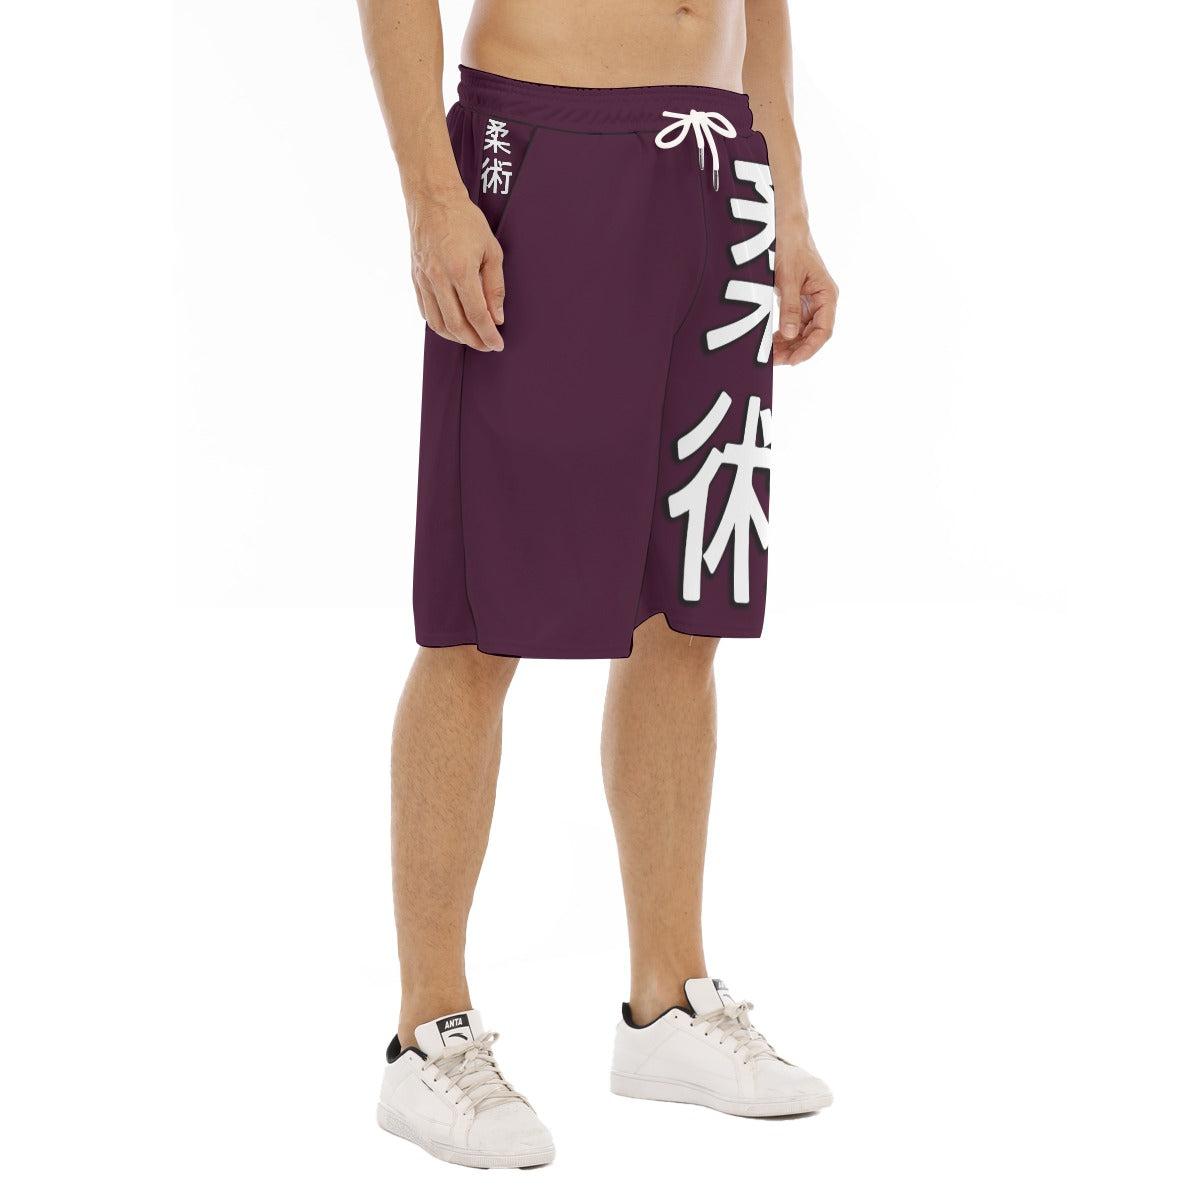 Plum Jitsu Shorts